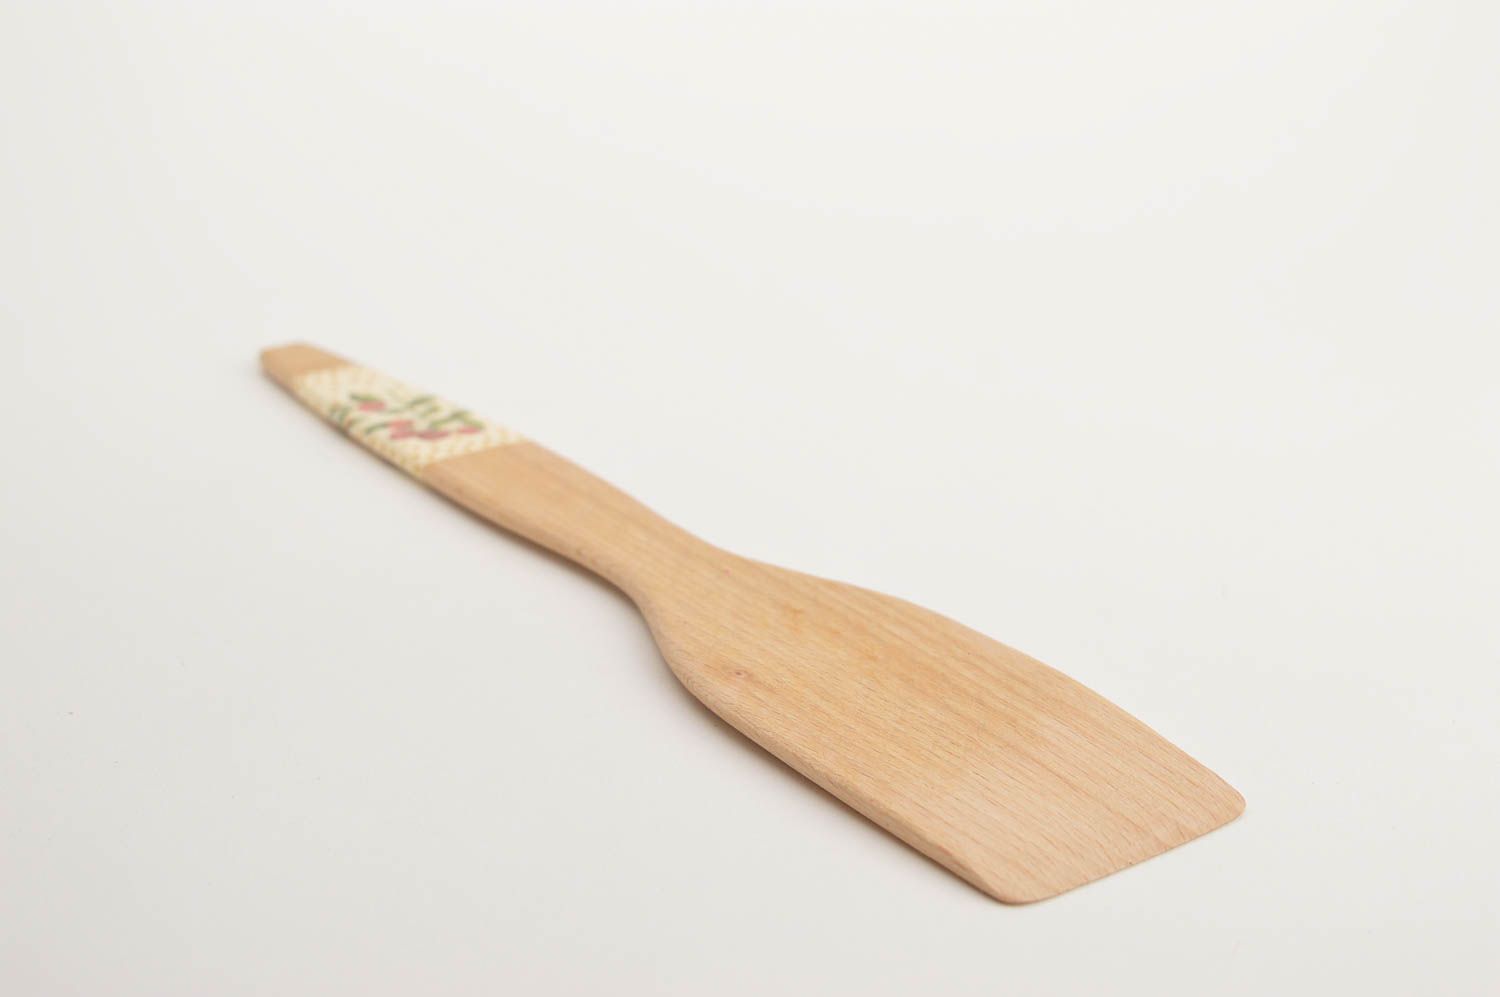 Unusual handmade wooden spatula decoupage ideas cooking tools wood craft photo 3